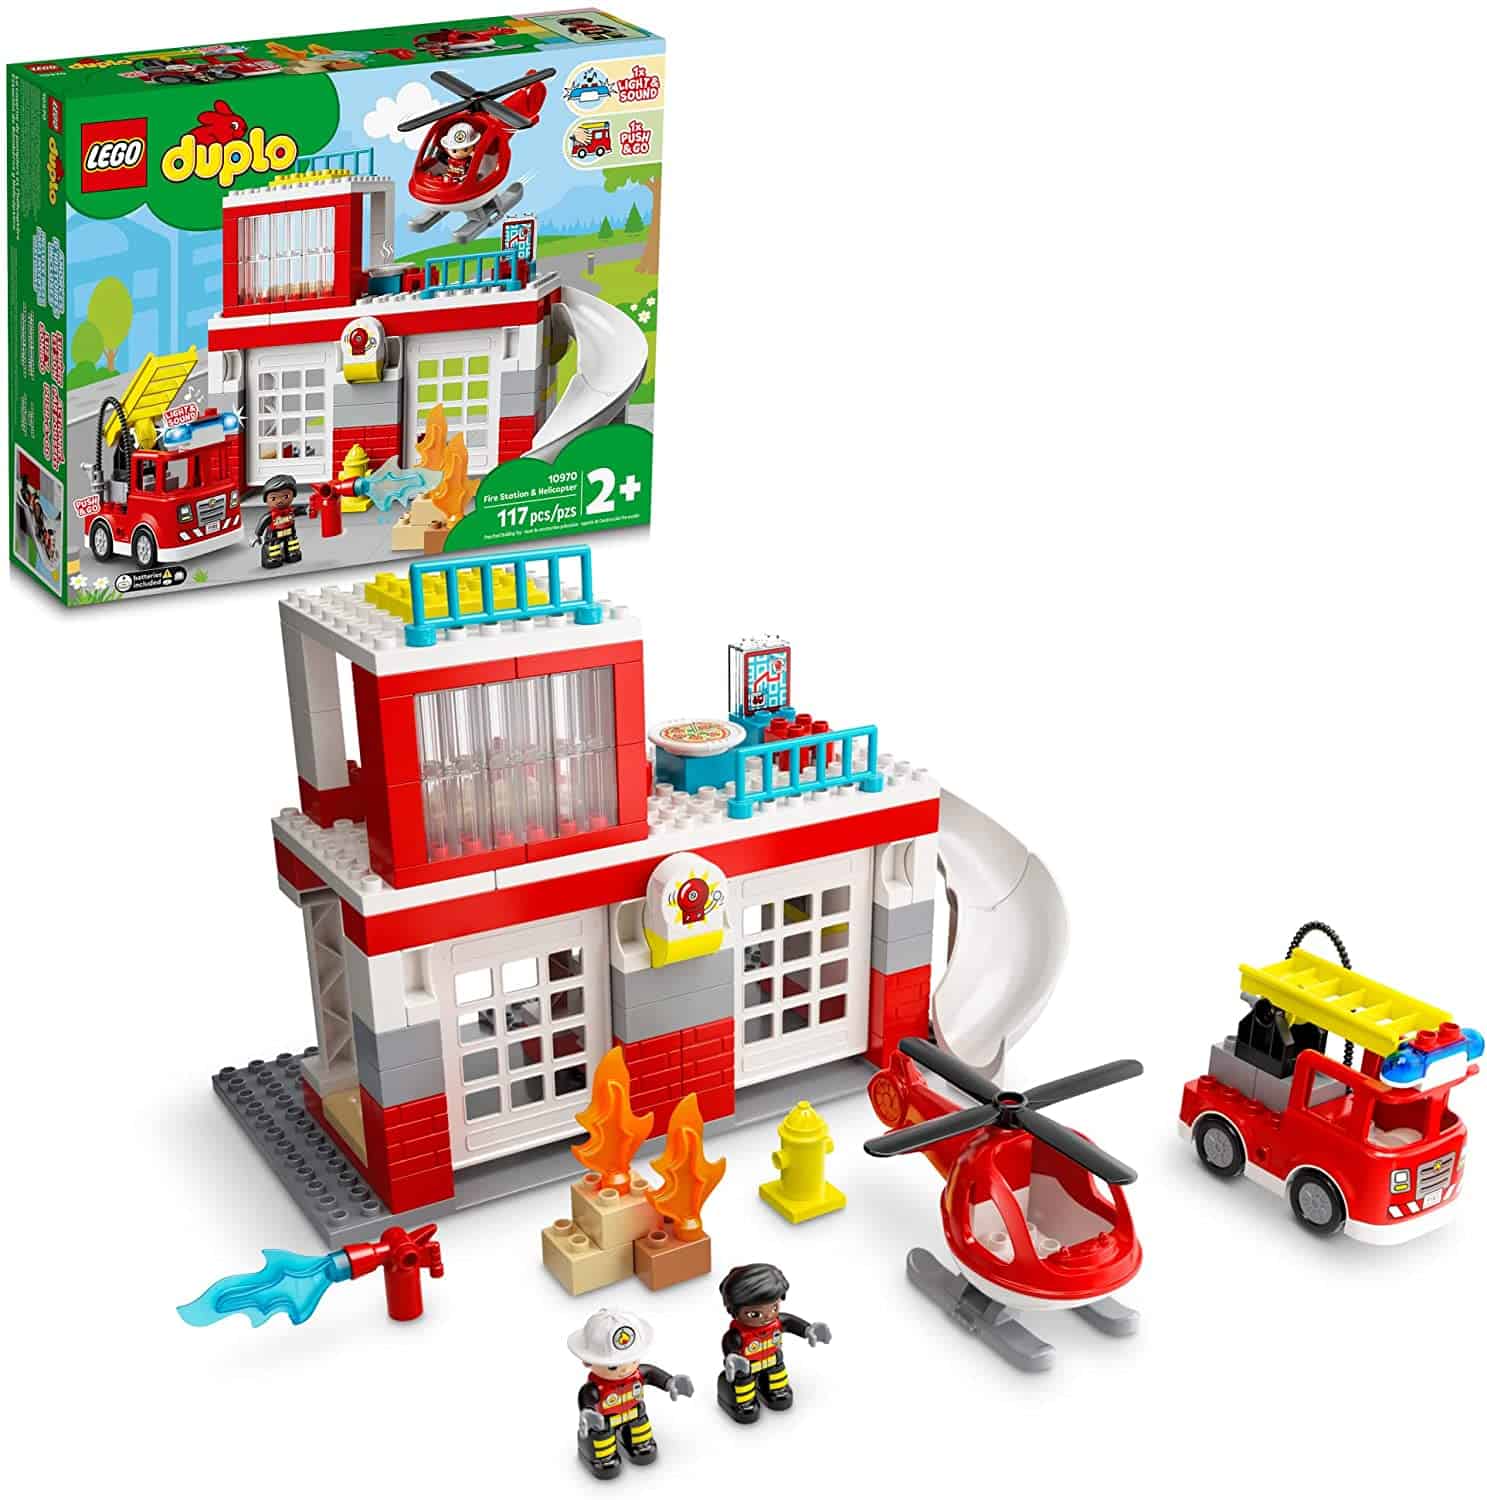 LEGO DUPLO Rescue Fire Station Set